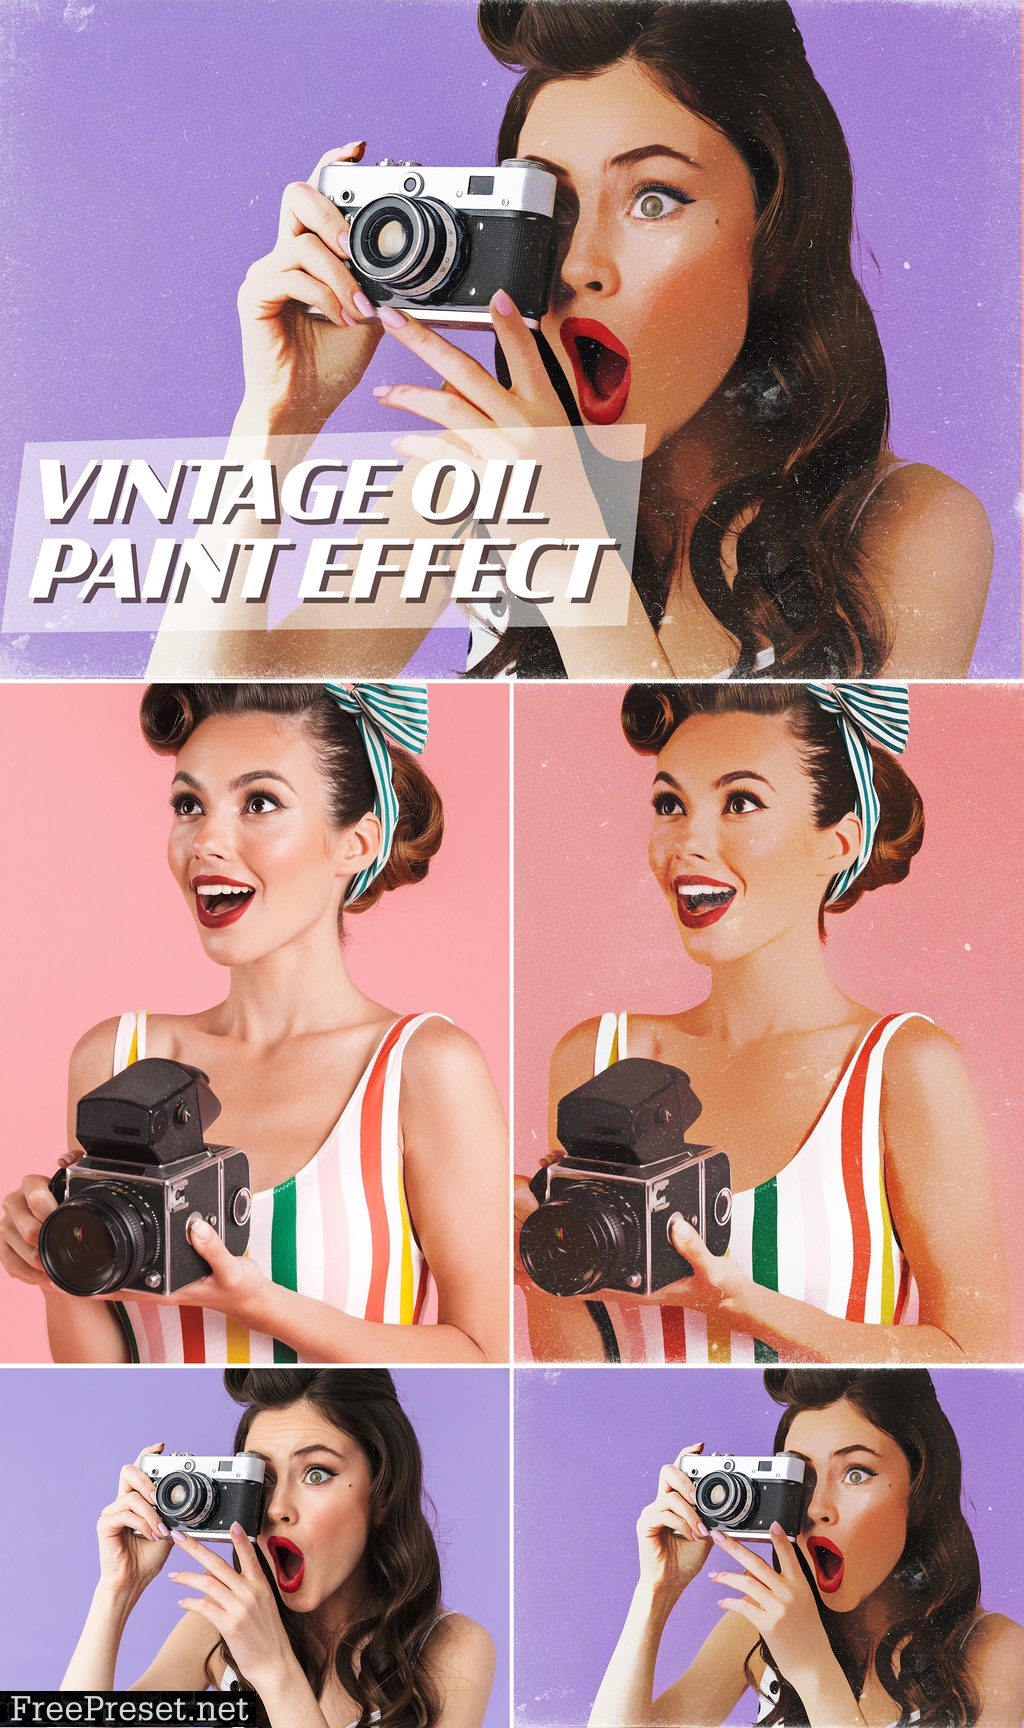 Vintage Paint Style Advertising Effect Mockup 342475313